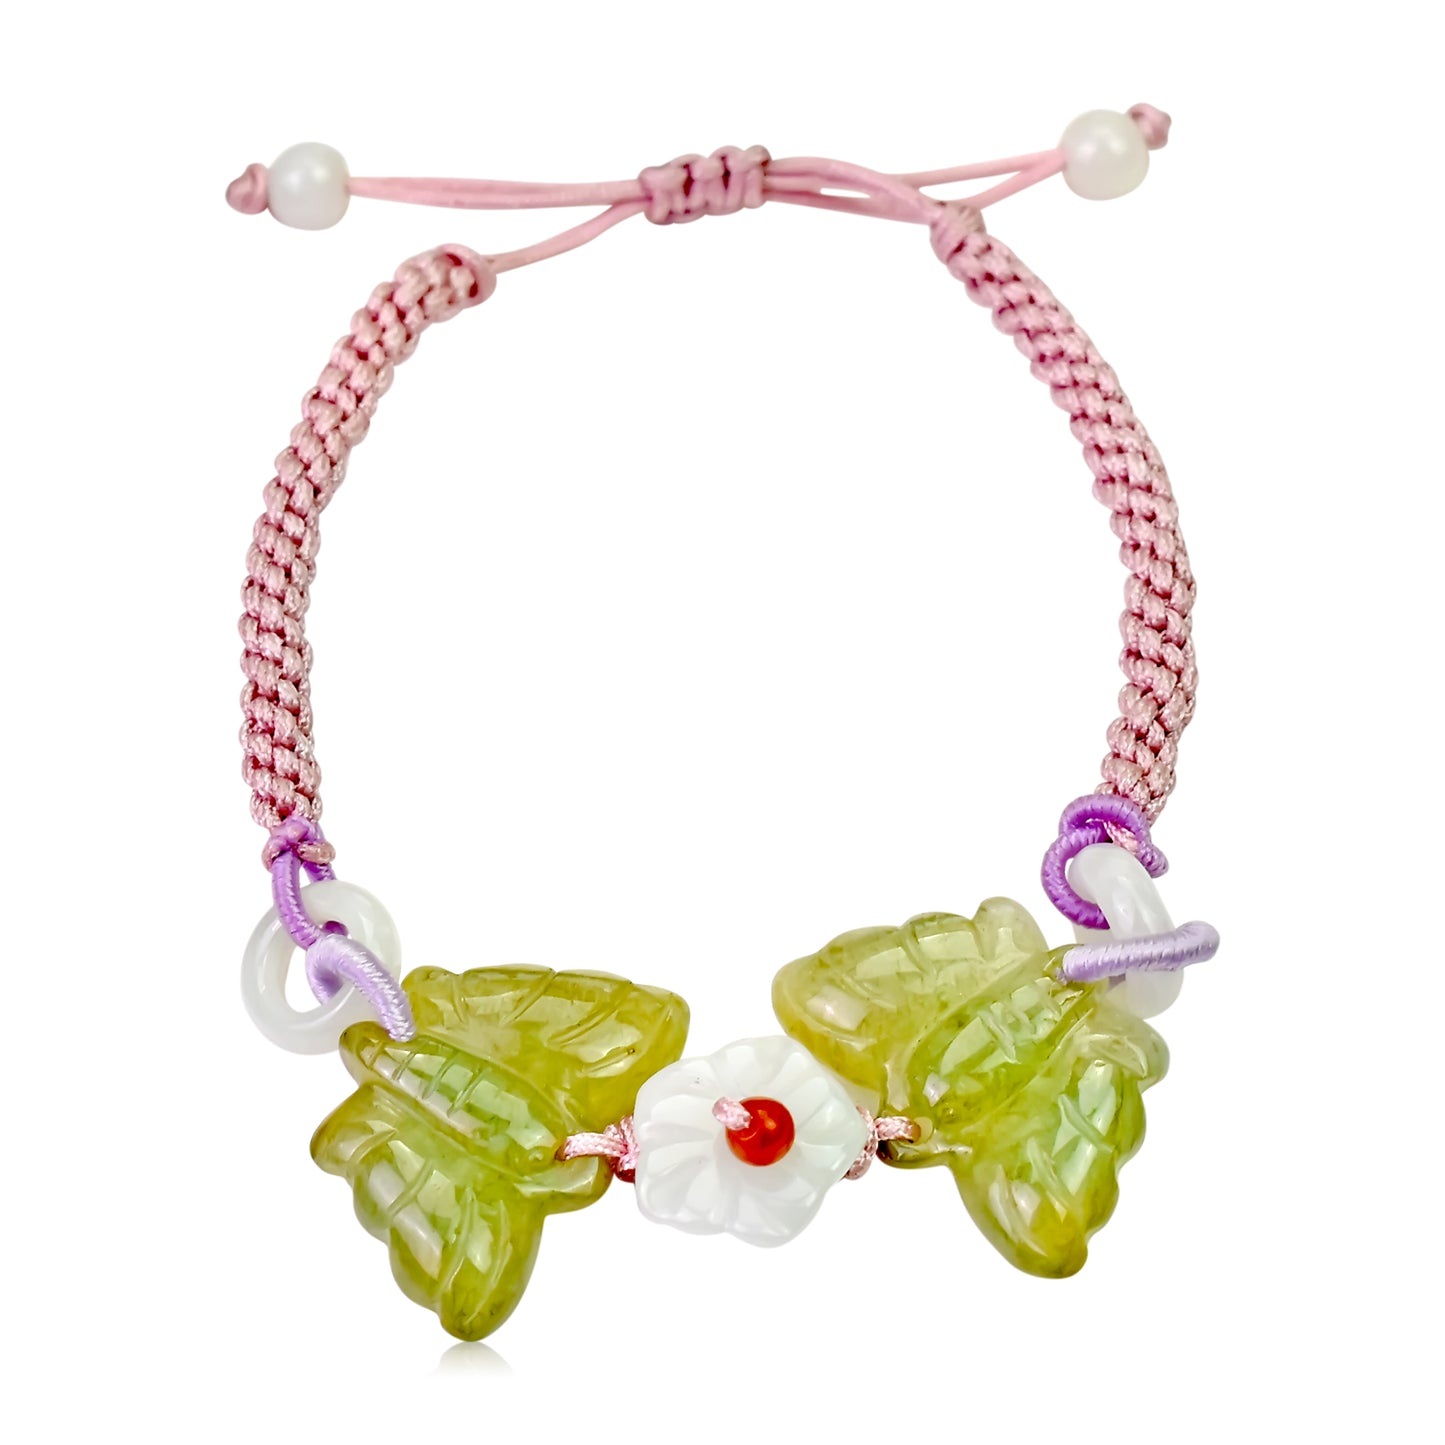 Two Joyful Butterflies Handmade Hand Braided Natural Jade Bracelet made with Lavender Cord